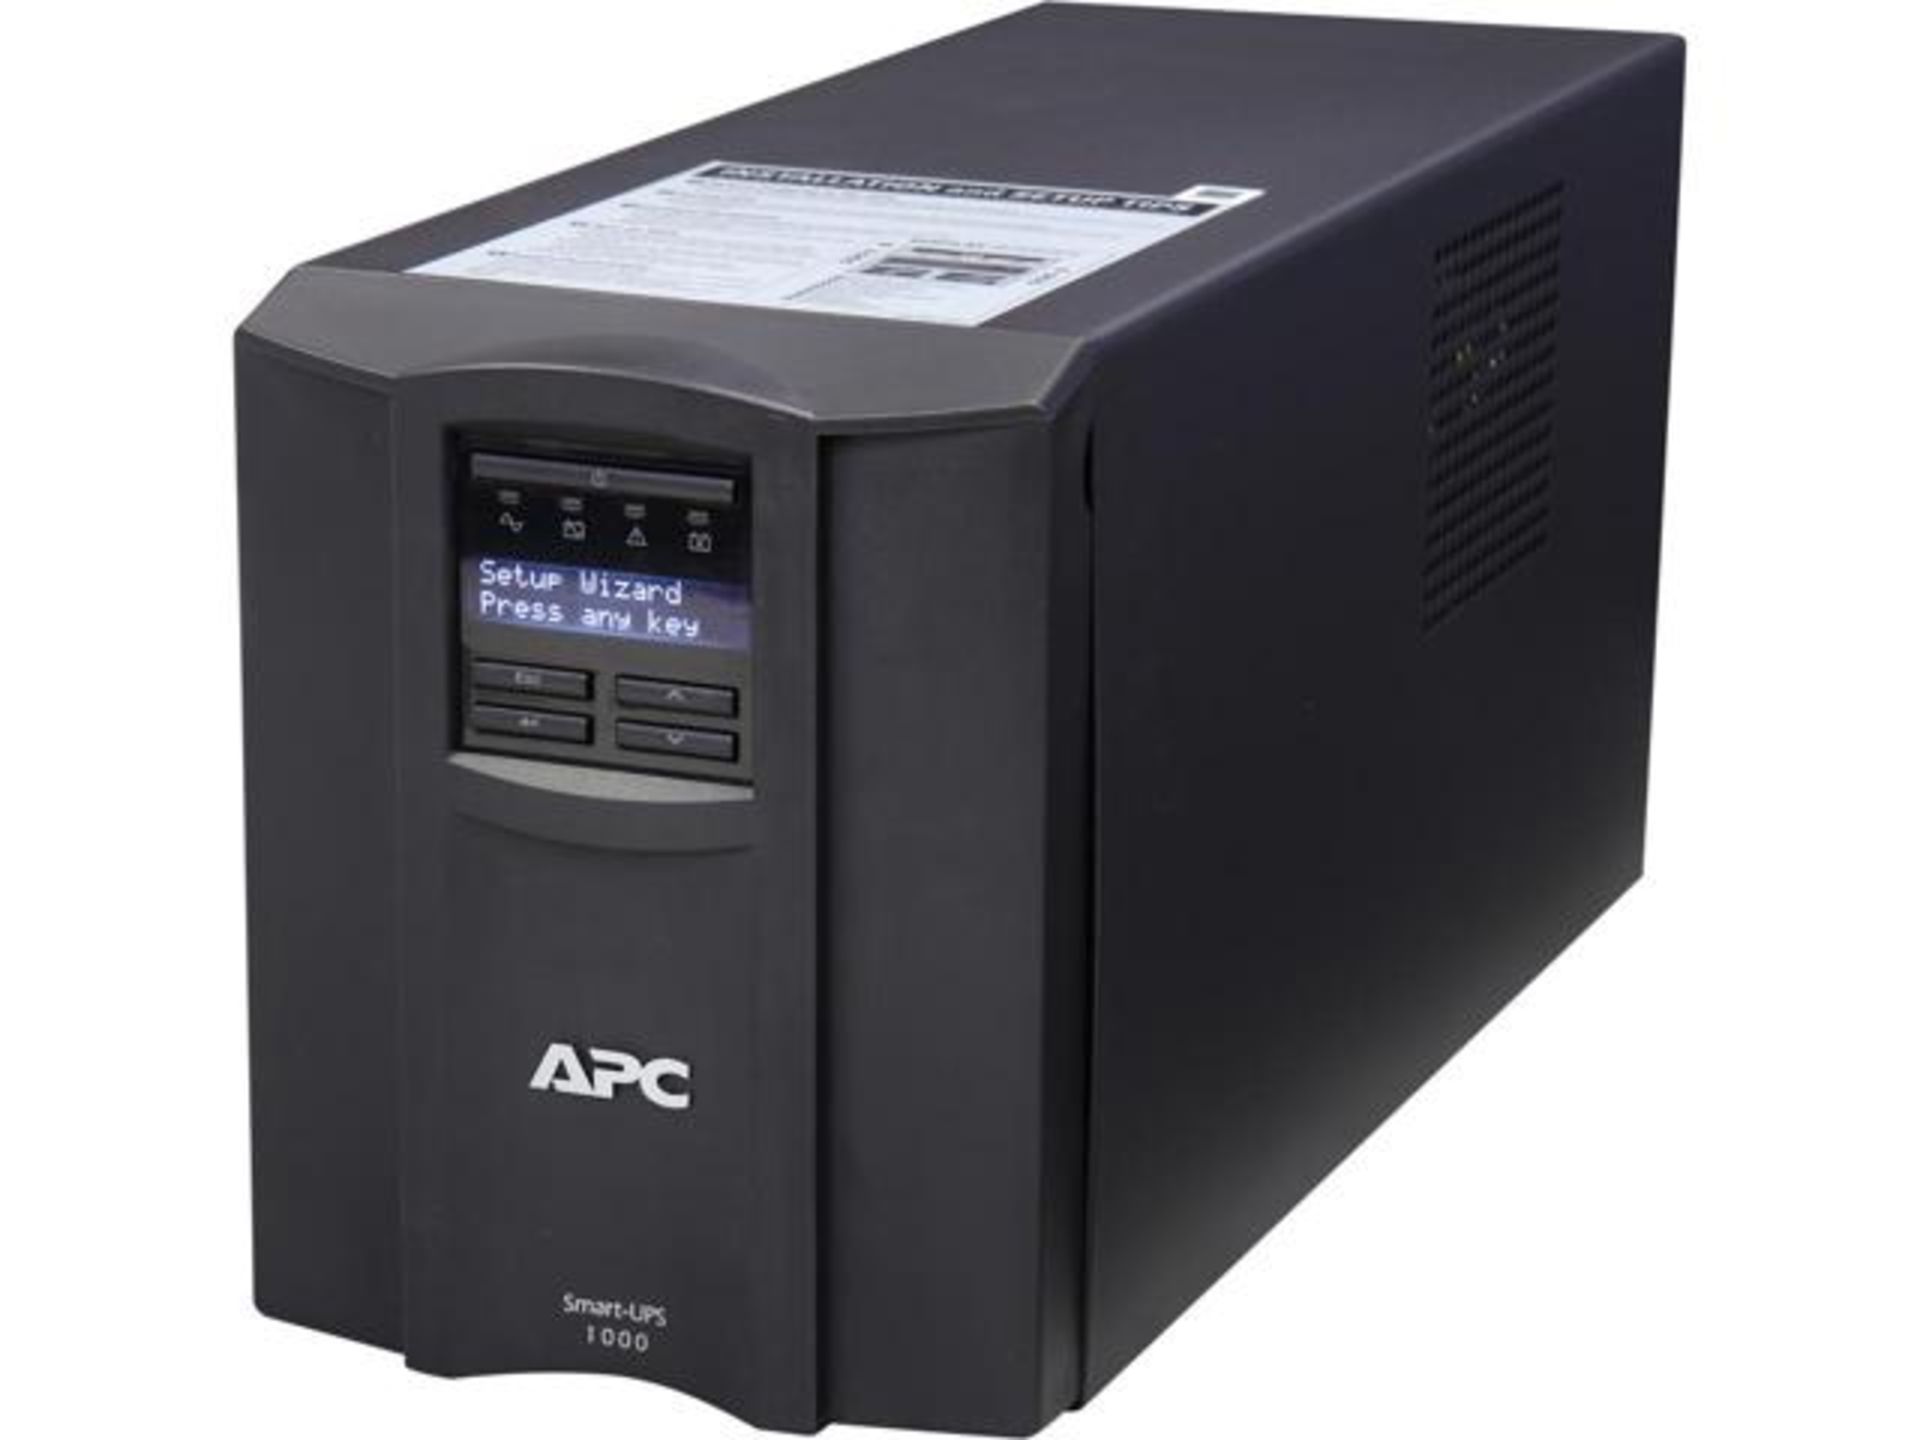 APC Smart-UPS 1000 USB & Serial 230V Innovative line-interactive design uses the DC to AC power